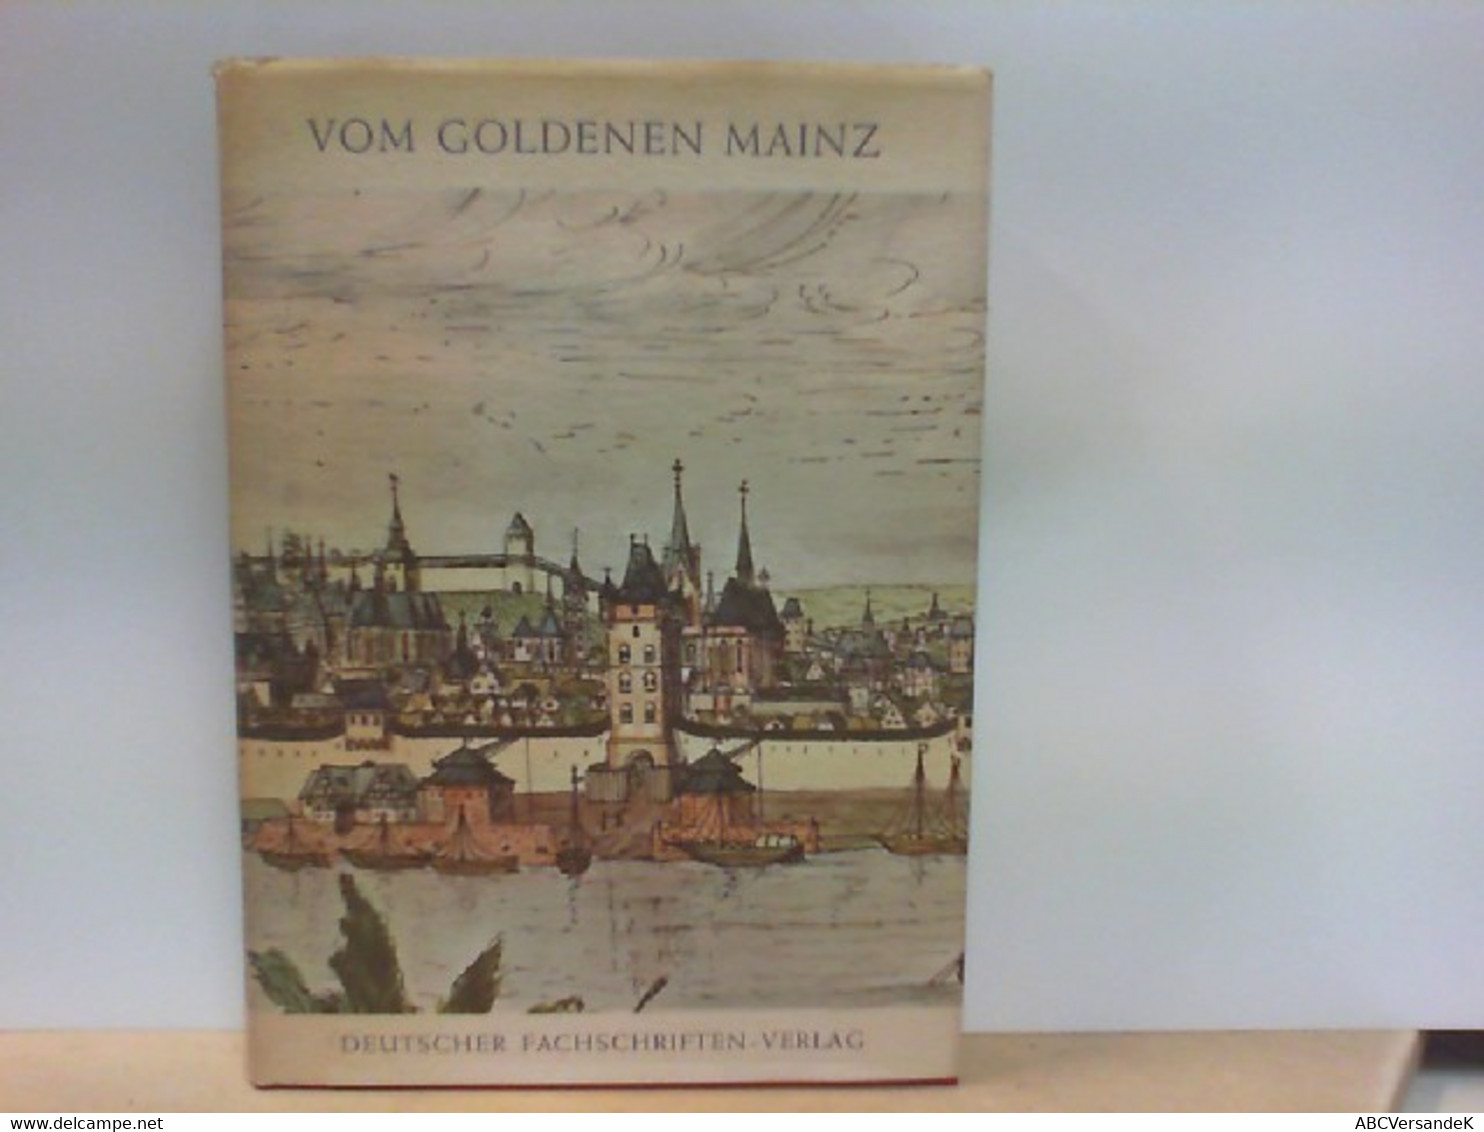 Vom Goldenen Mainz - Germany (general)